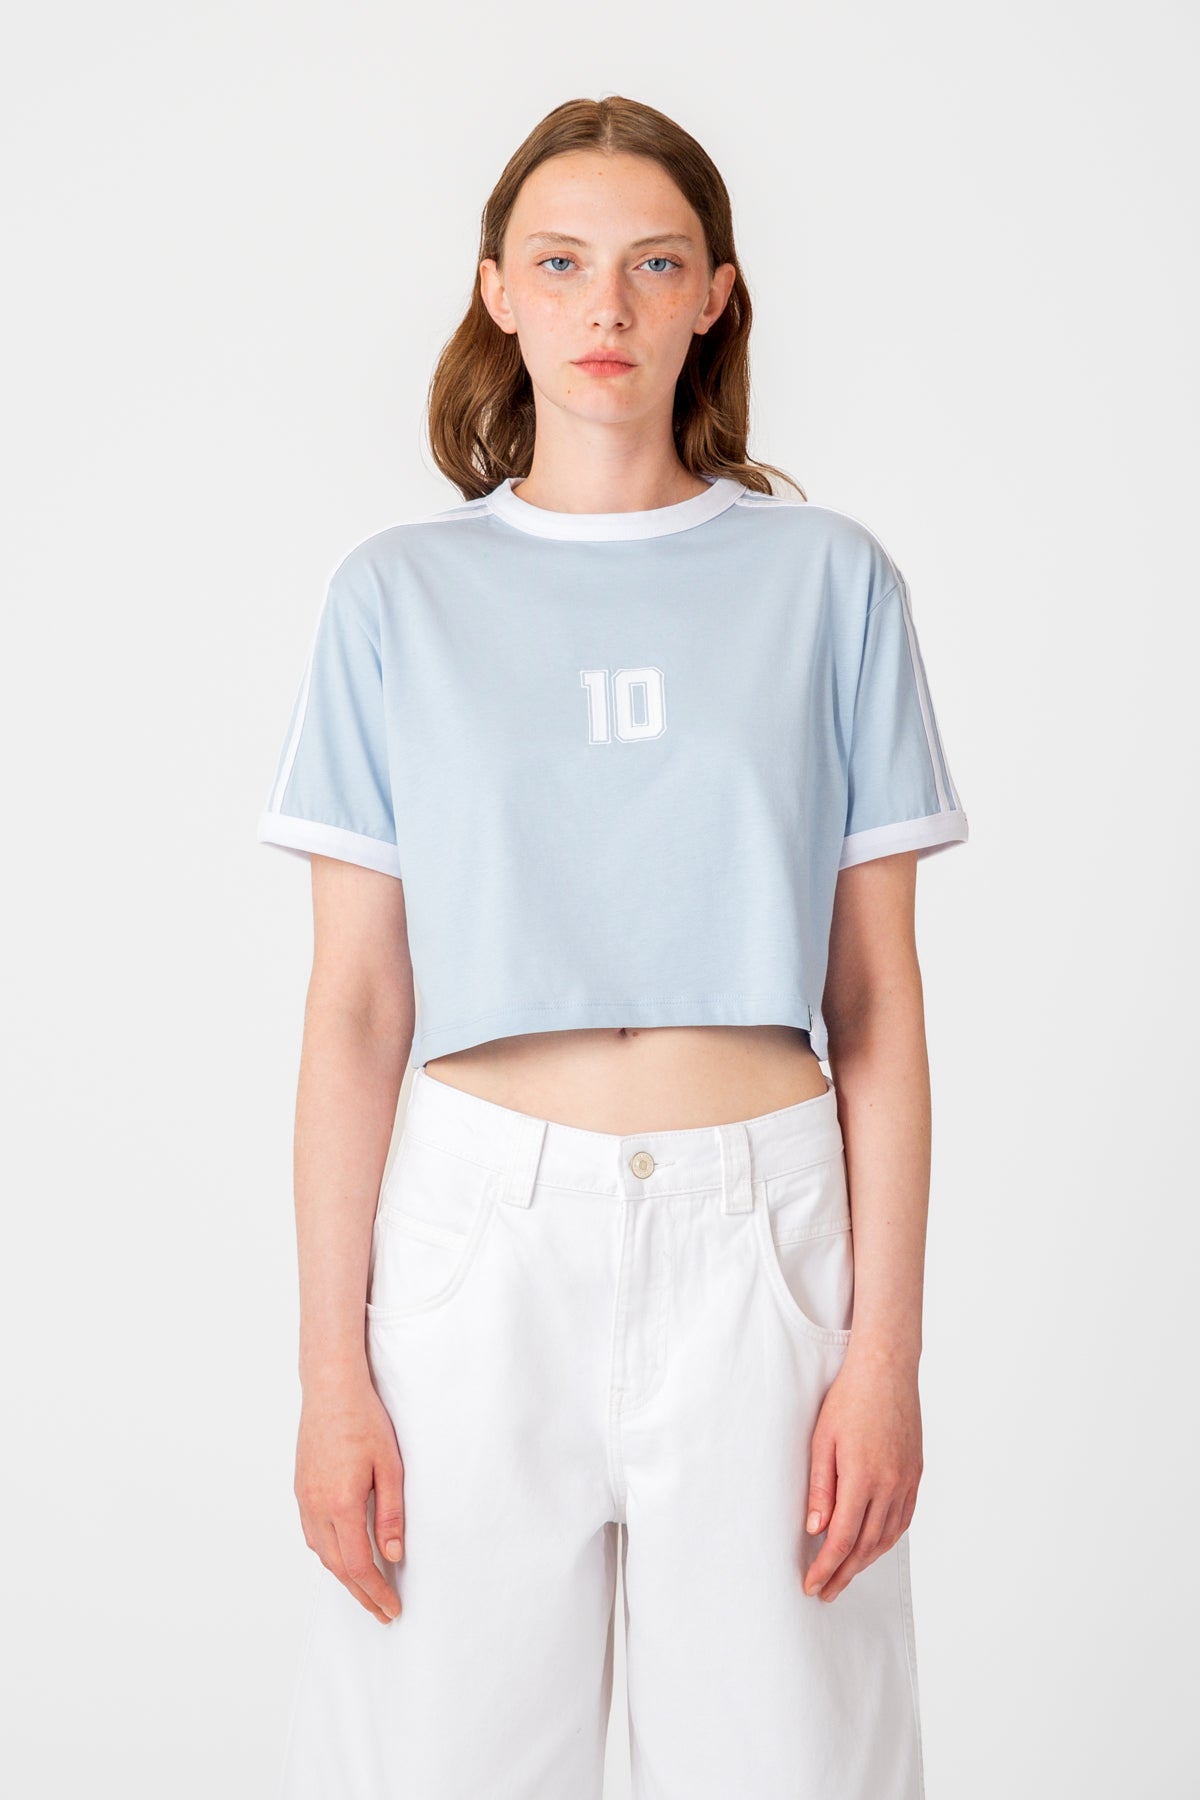 Argentina 10  Supreme Crop T-shirt  - Açık Mavi